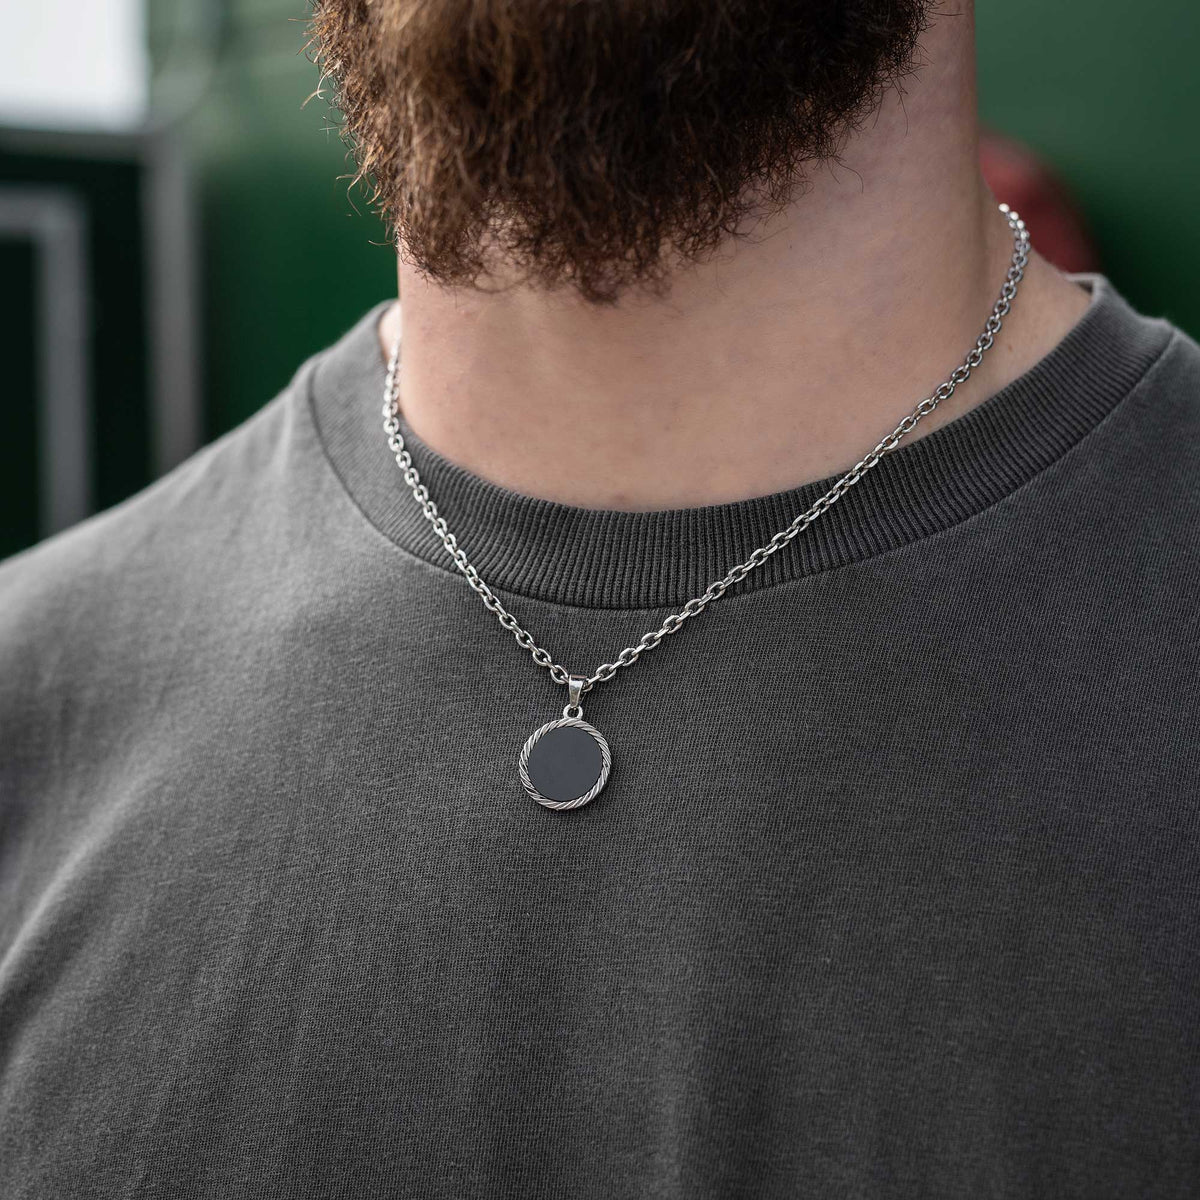 Unisex onyx stone pendant necklace on body by statement